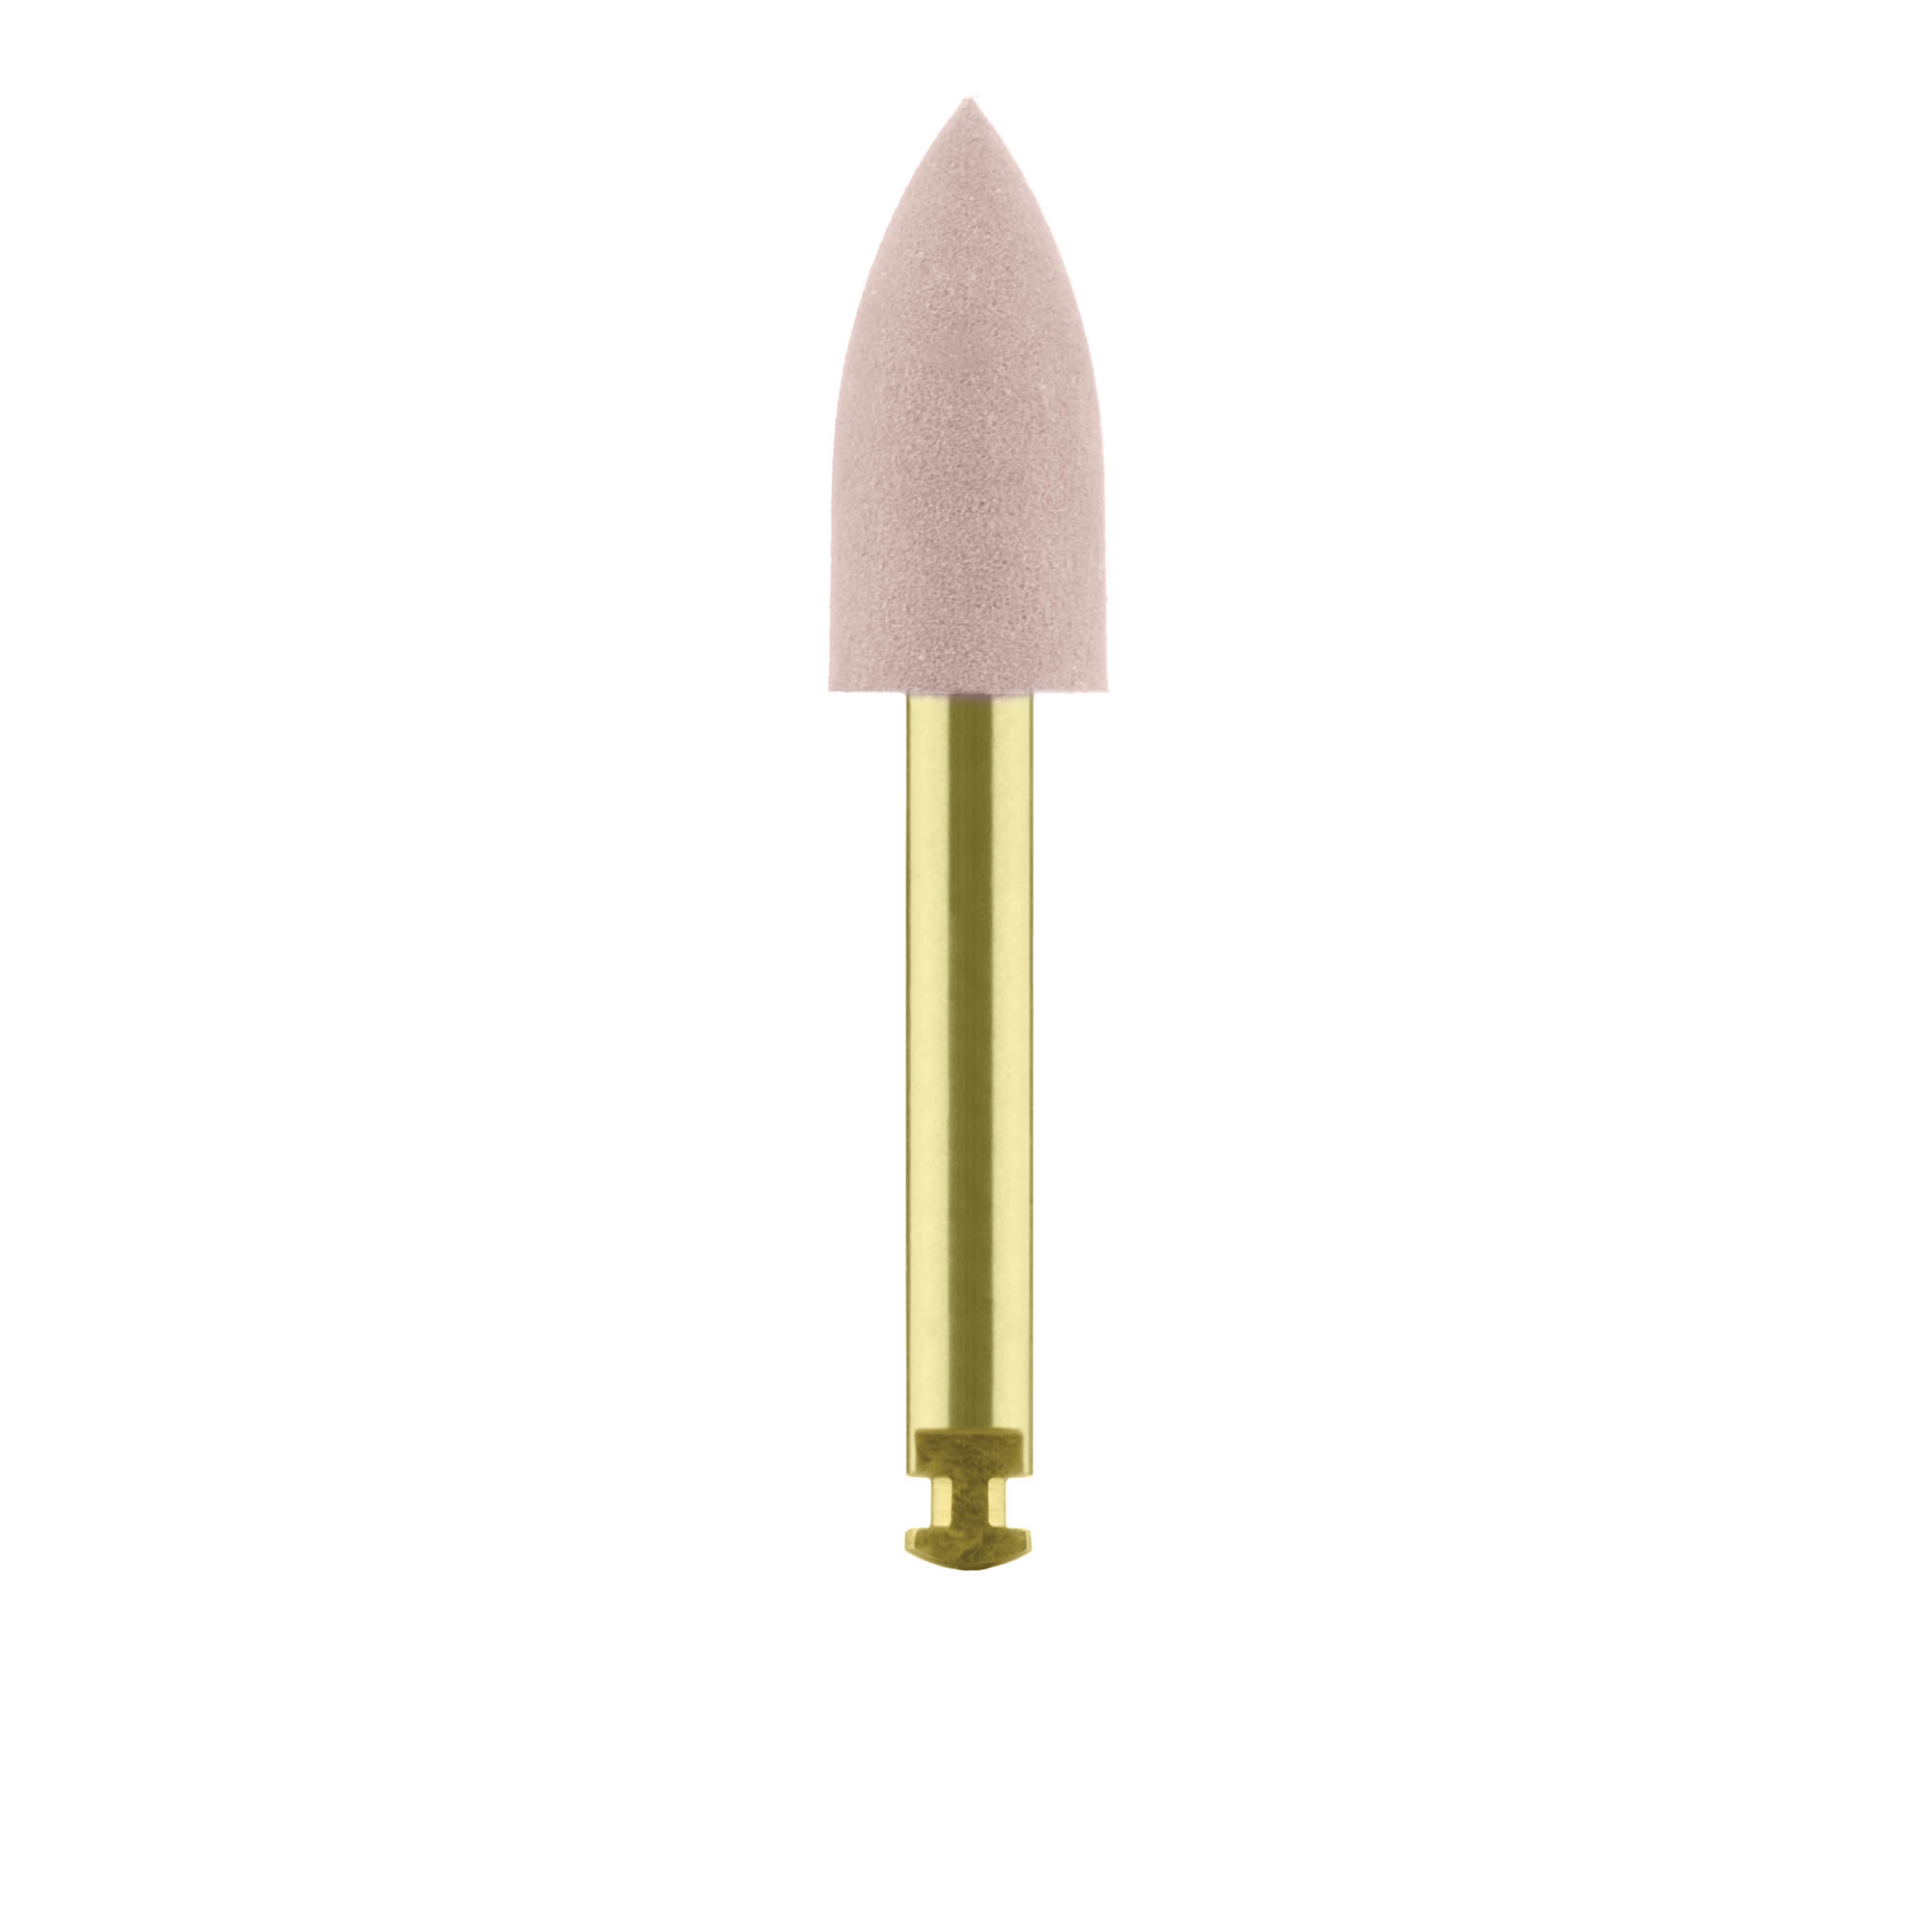 9766M-050-RA-PINK Polisher, Pink, Bullet, 5mm Ø, Highly-Filled Composites, Smoothing, RA 